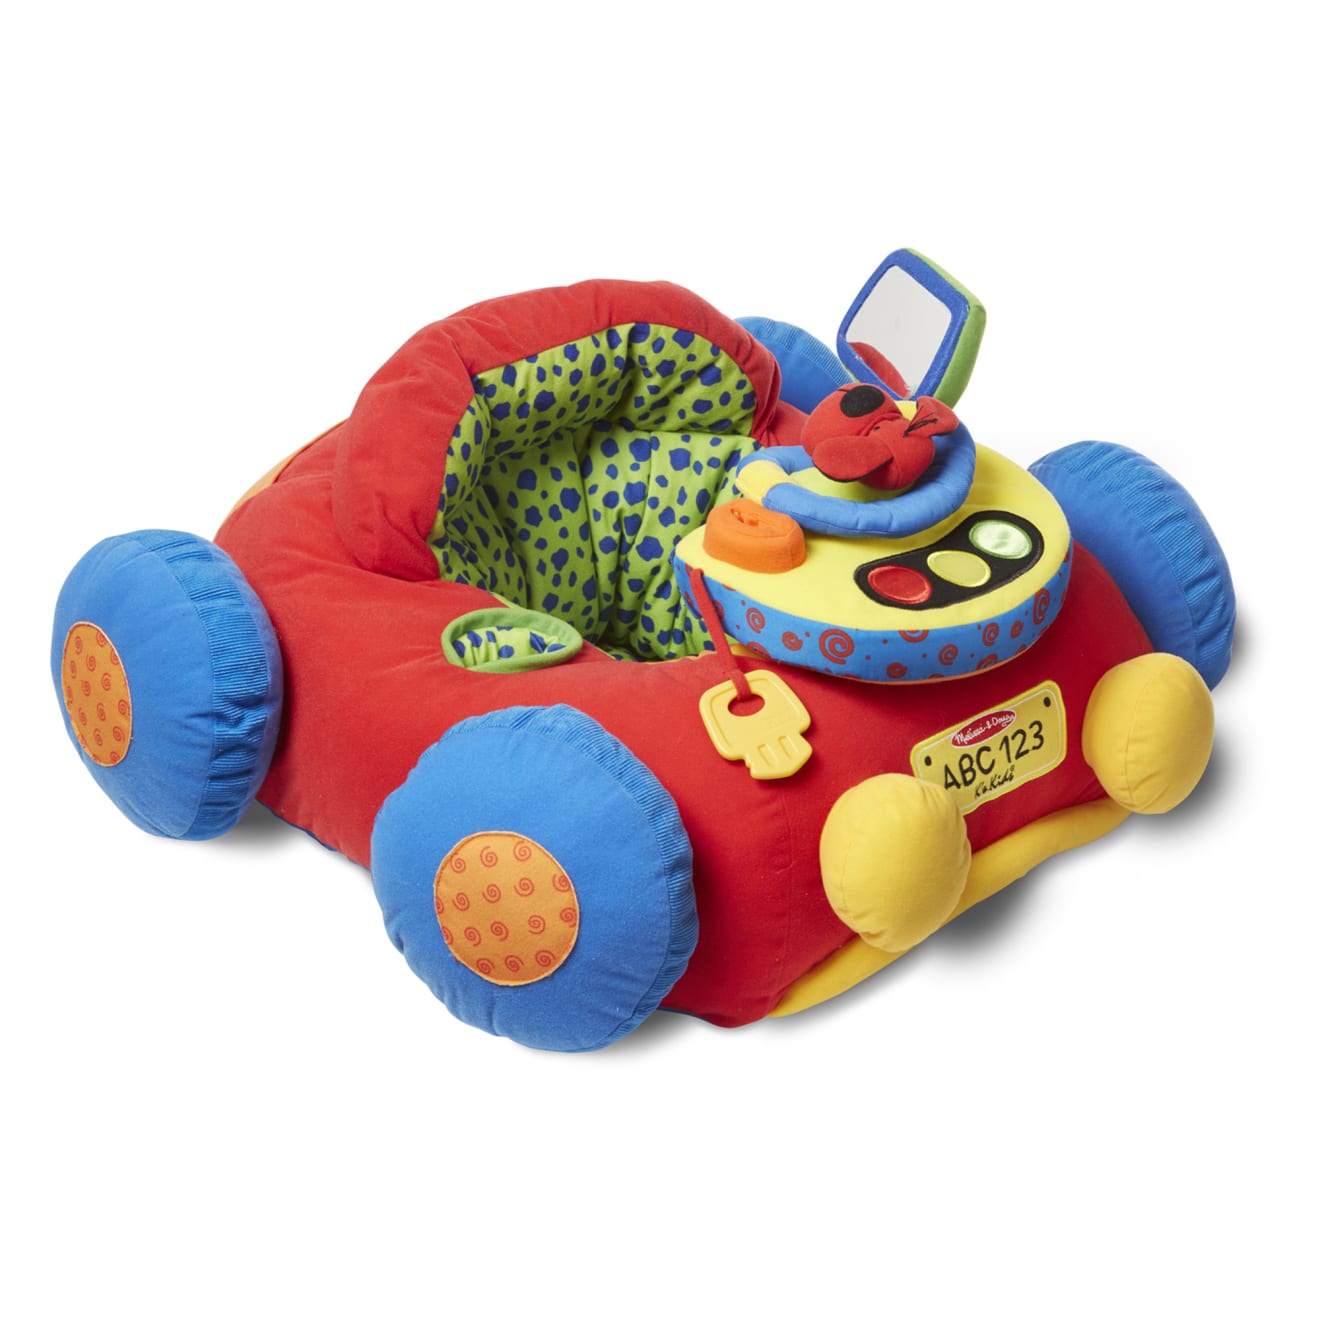 Beep-Beep & Play Activity Toy | Sit-In Play Car | Melissa & Doug